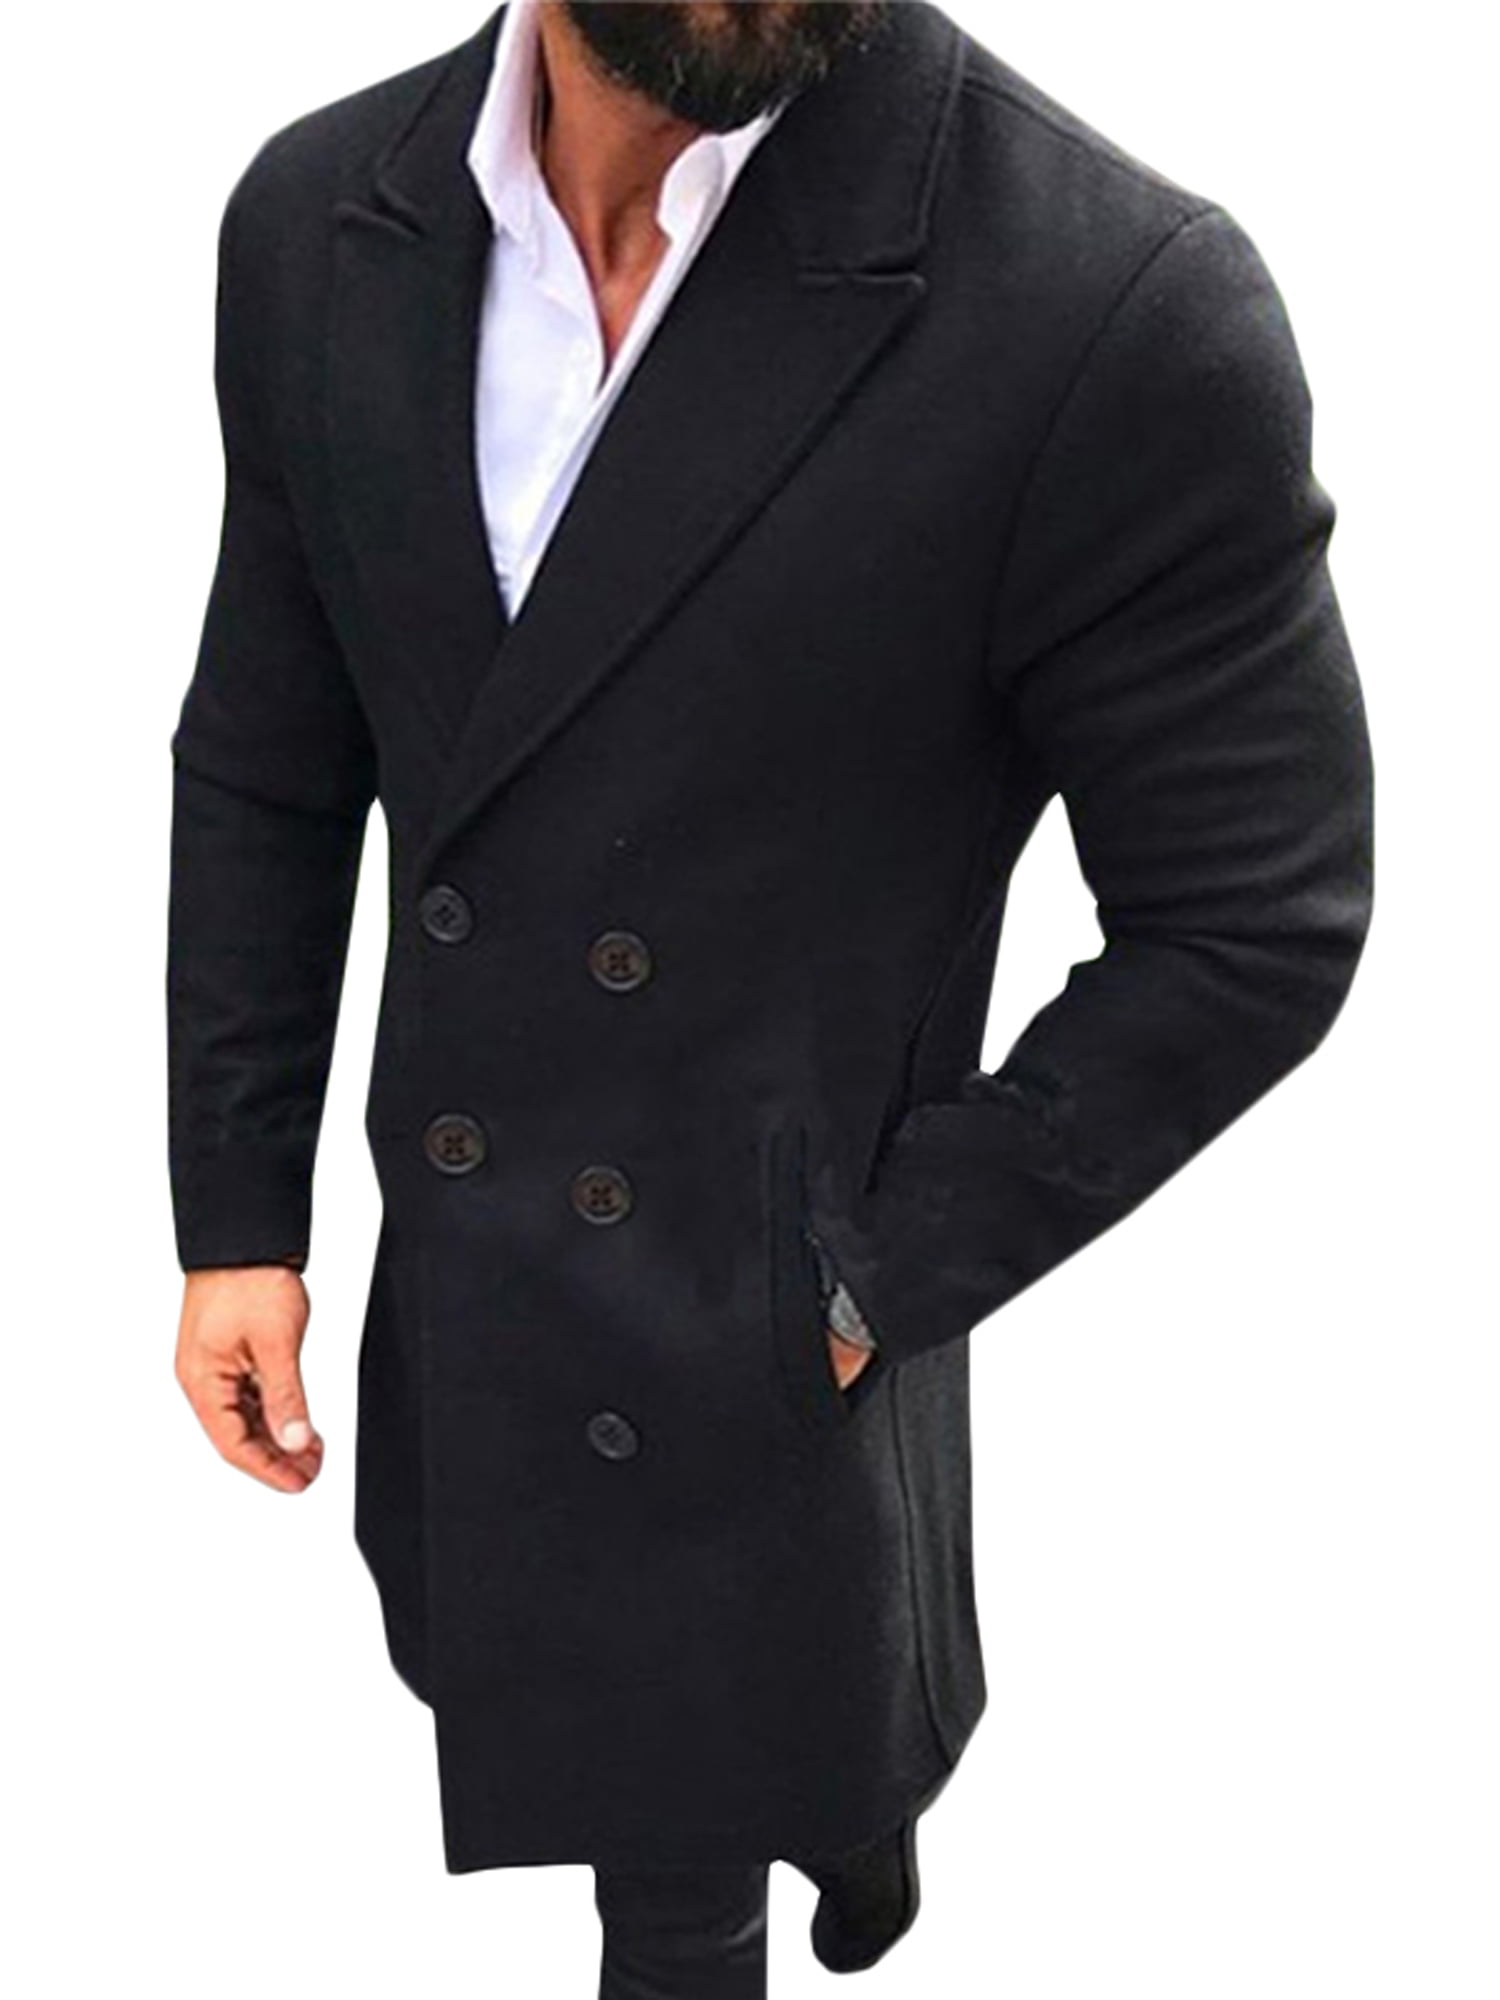 Men's Winter Warm Wool Trench Coat Casual Slim Overcoat Long Jacket Outwear Suit